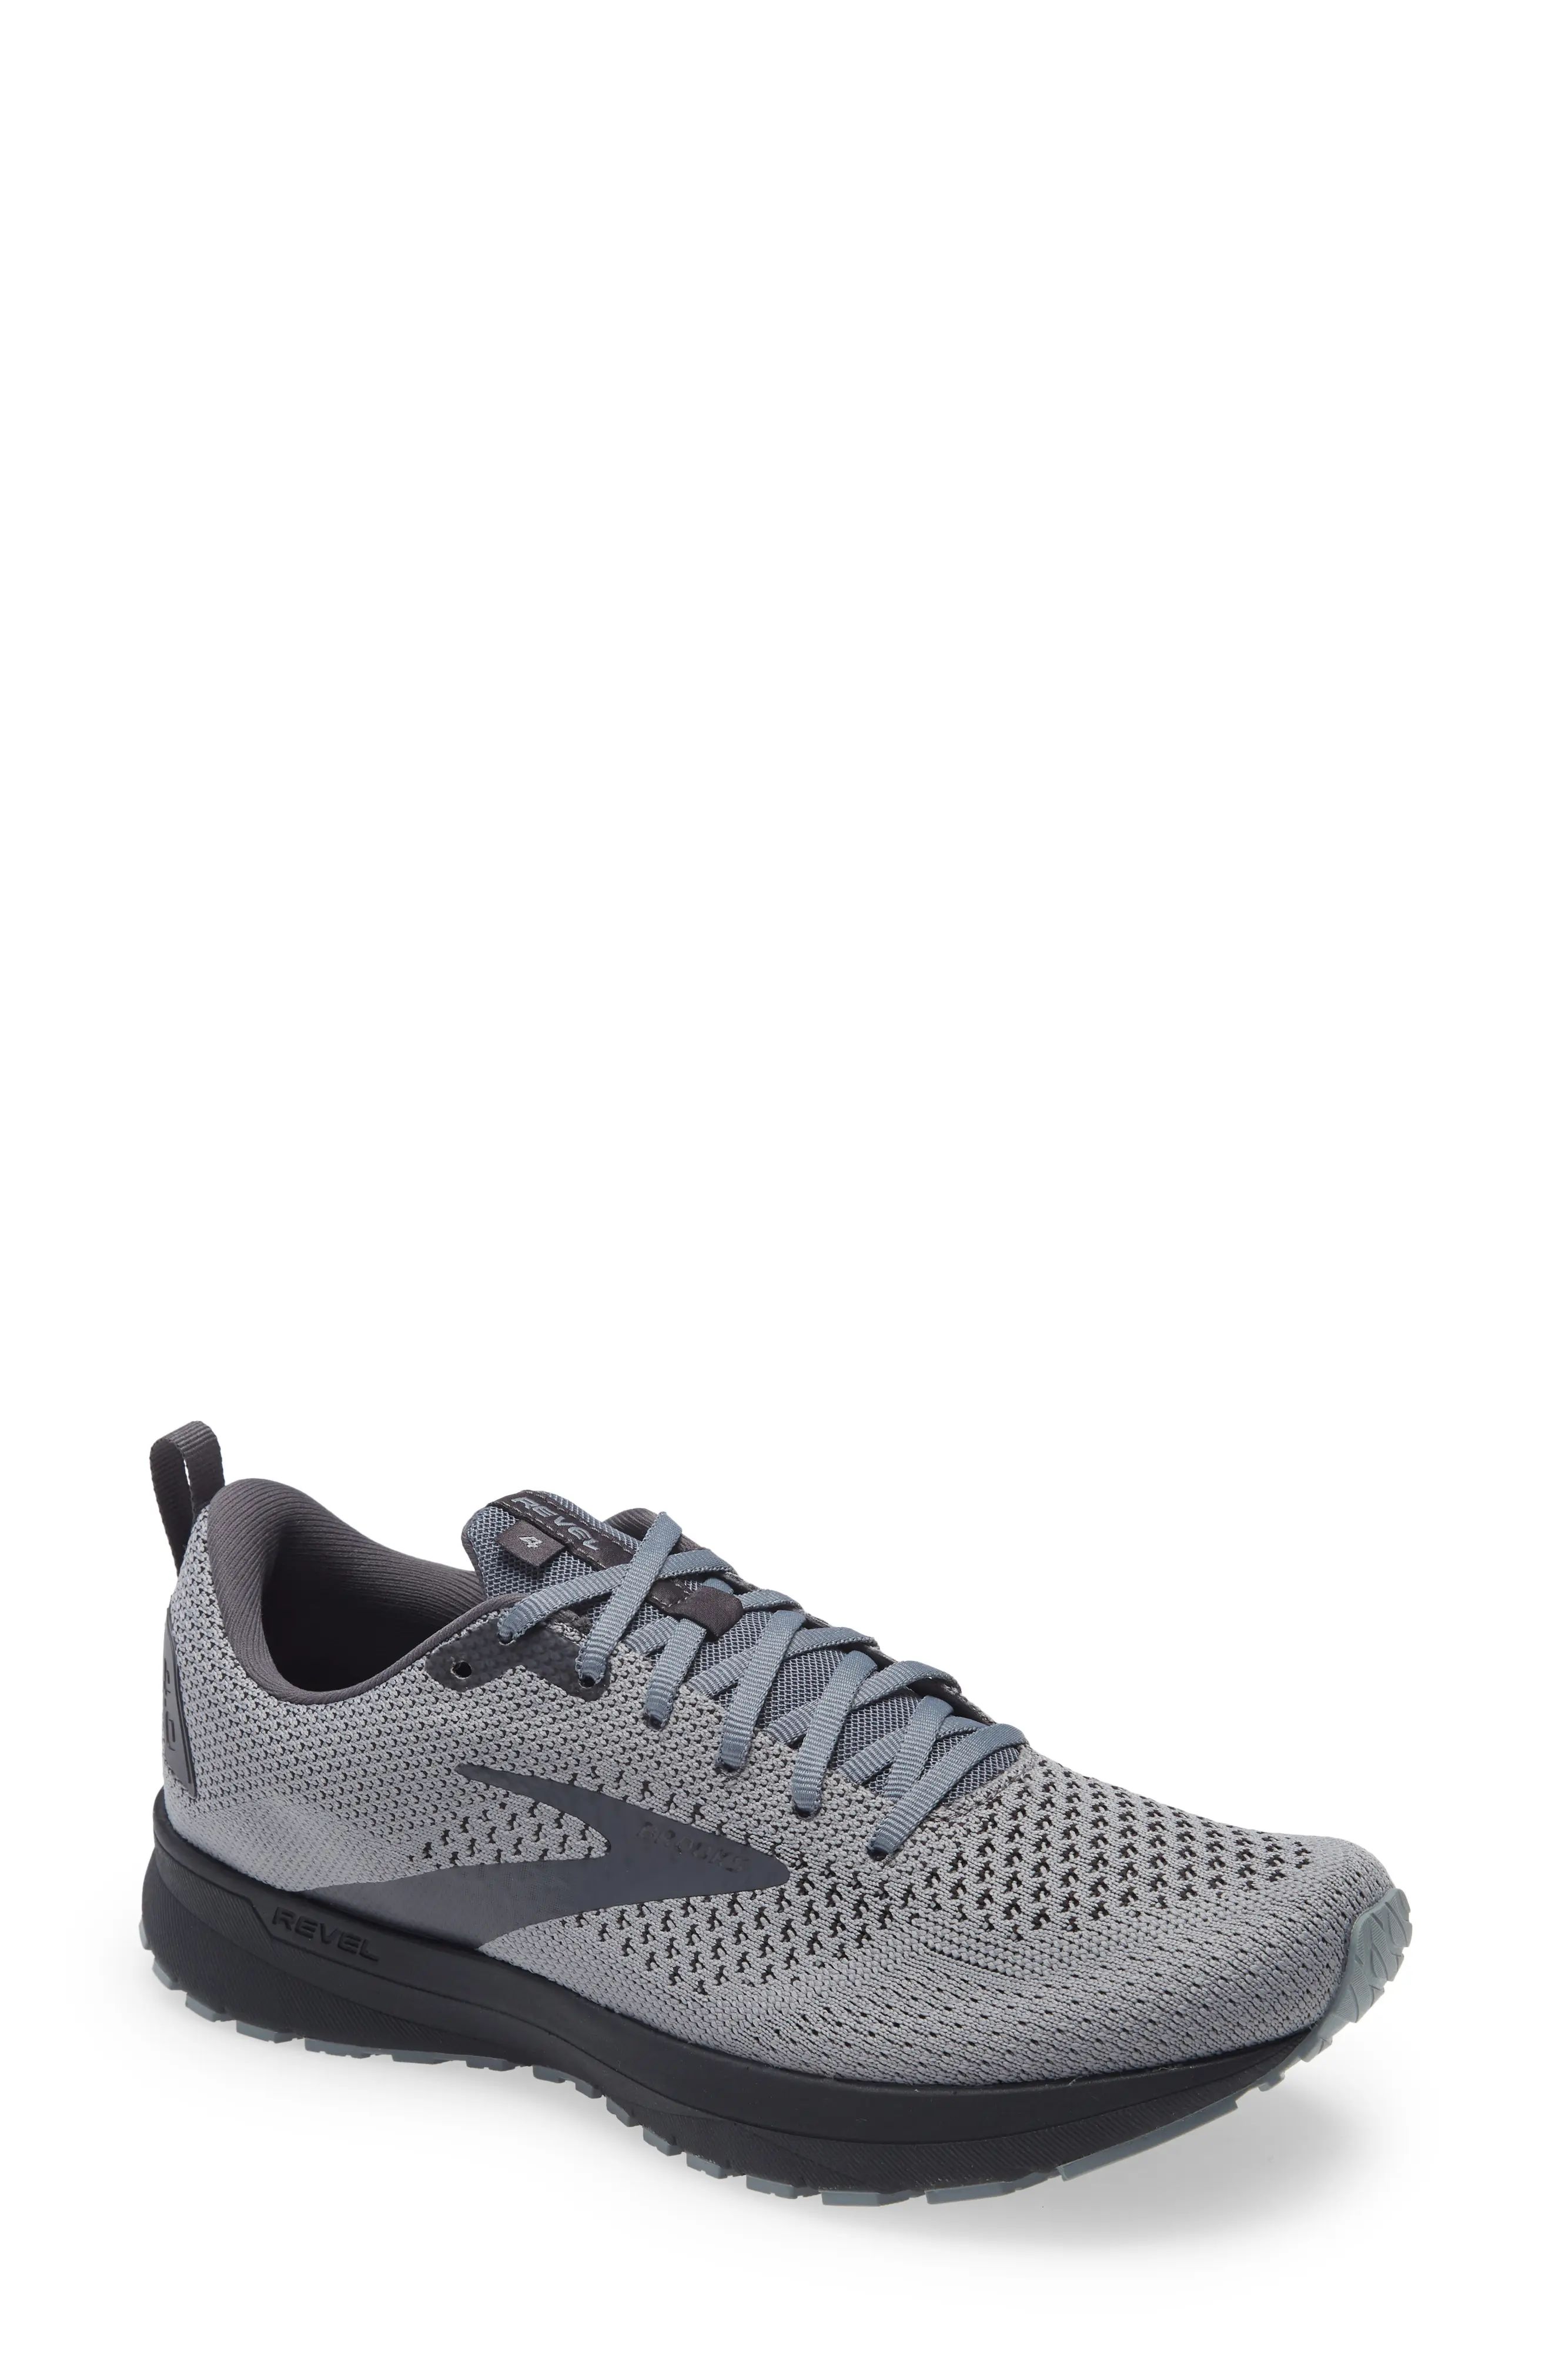 Brooks Revel 4 Hybrid Running Shoe in Grey/Blackened Pearl/Black at Nordstrom, Size 11.5 | Nordstrom